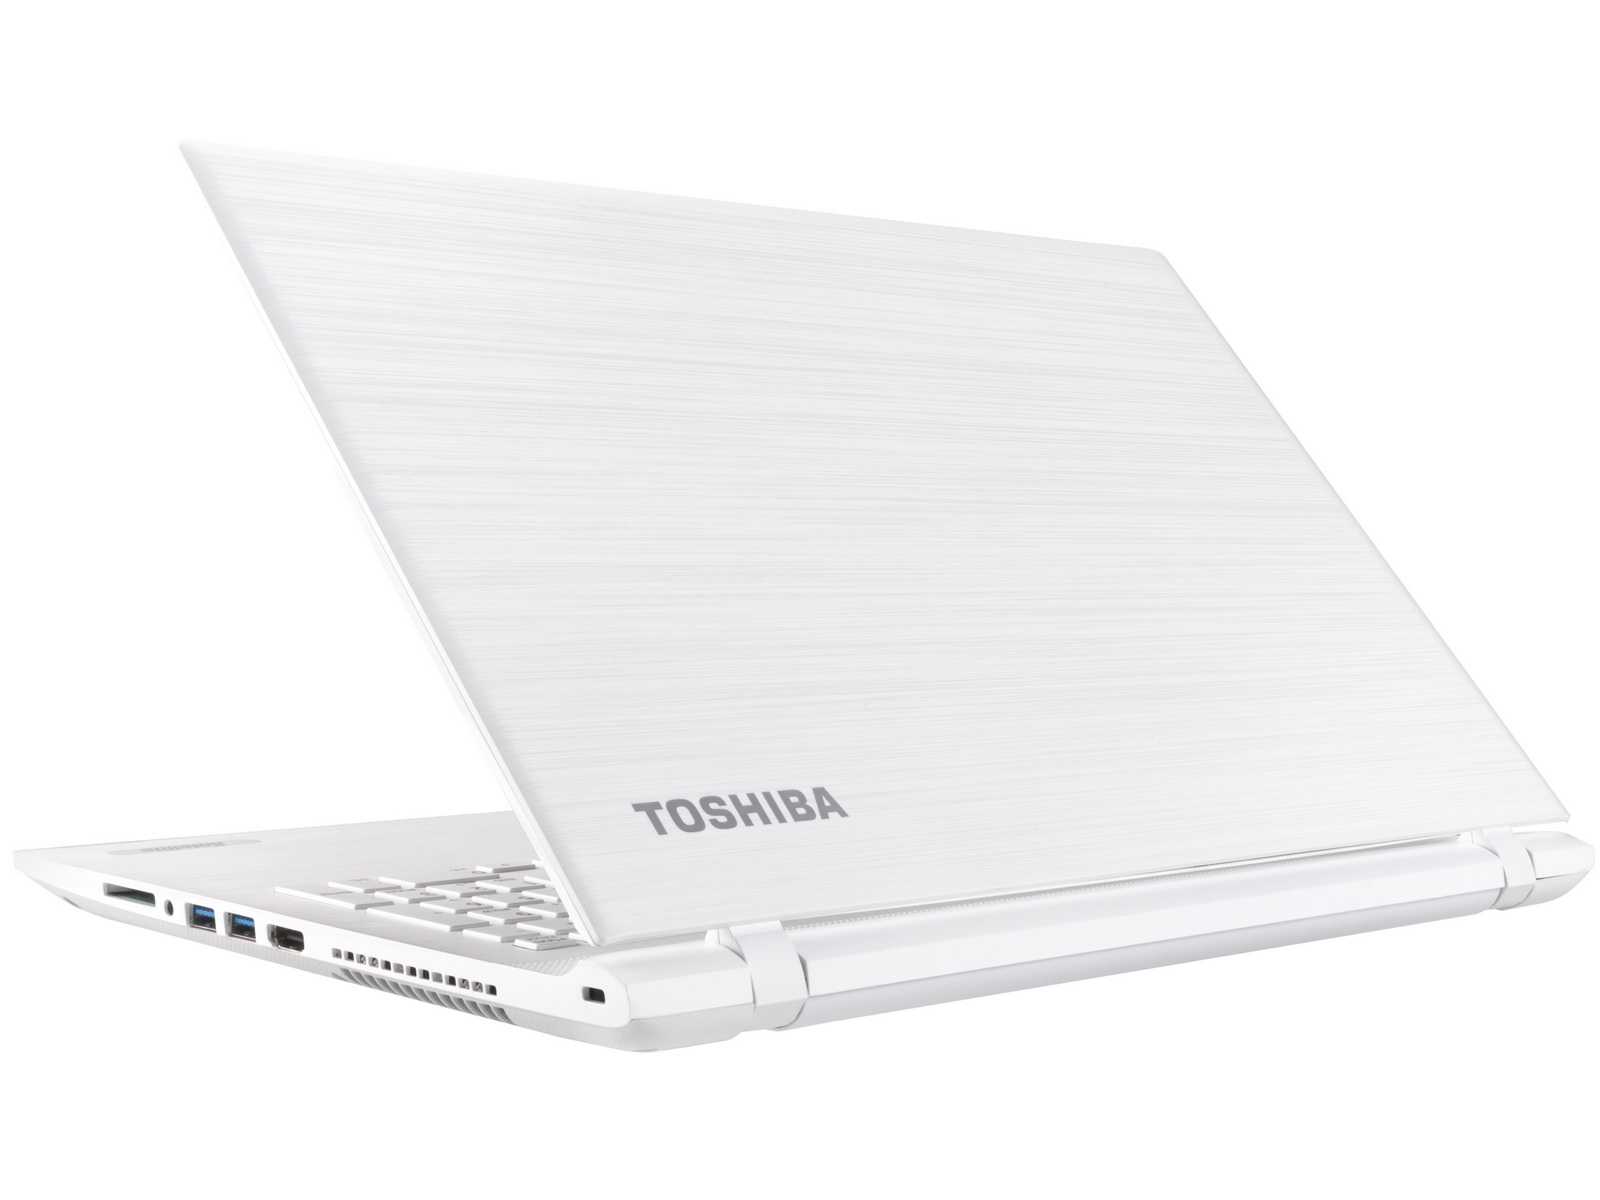 Ноутбук toshiba satellite s70-a-l2m — купить, цена и характеристики, отзывы